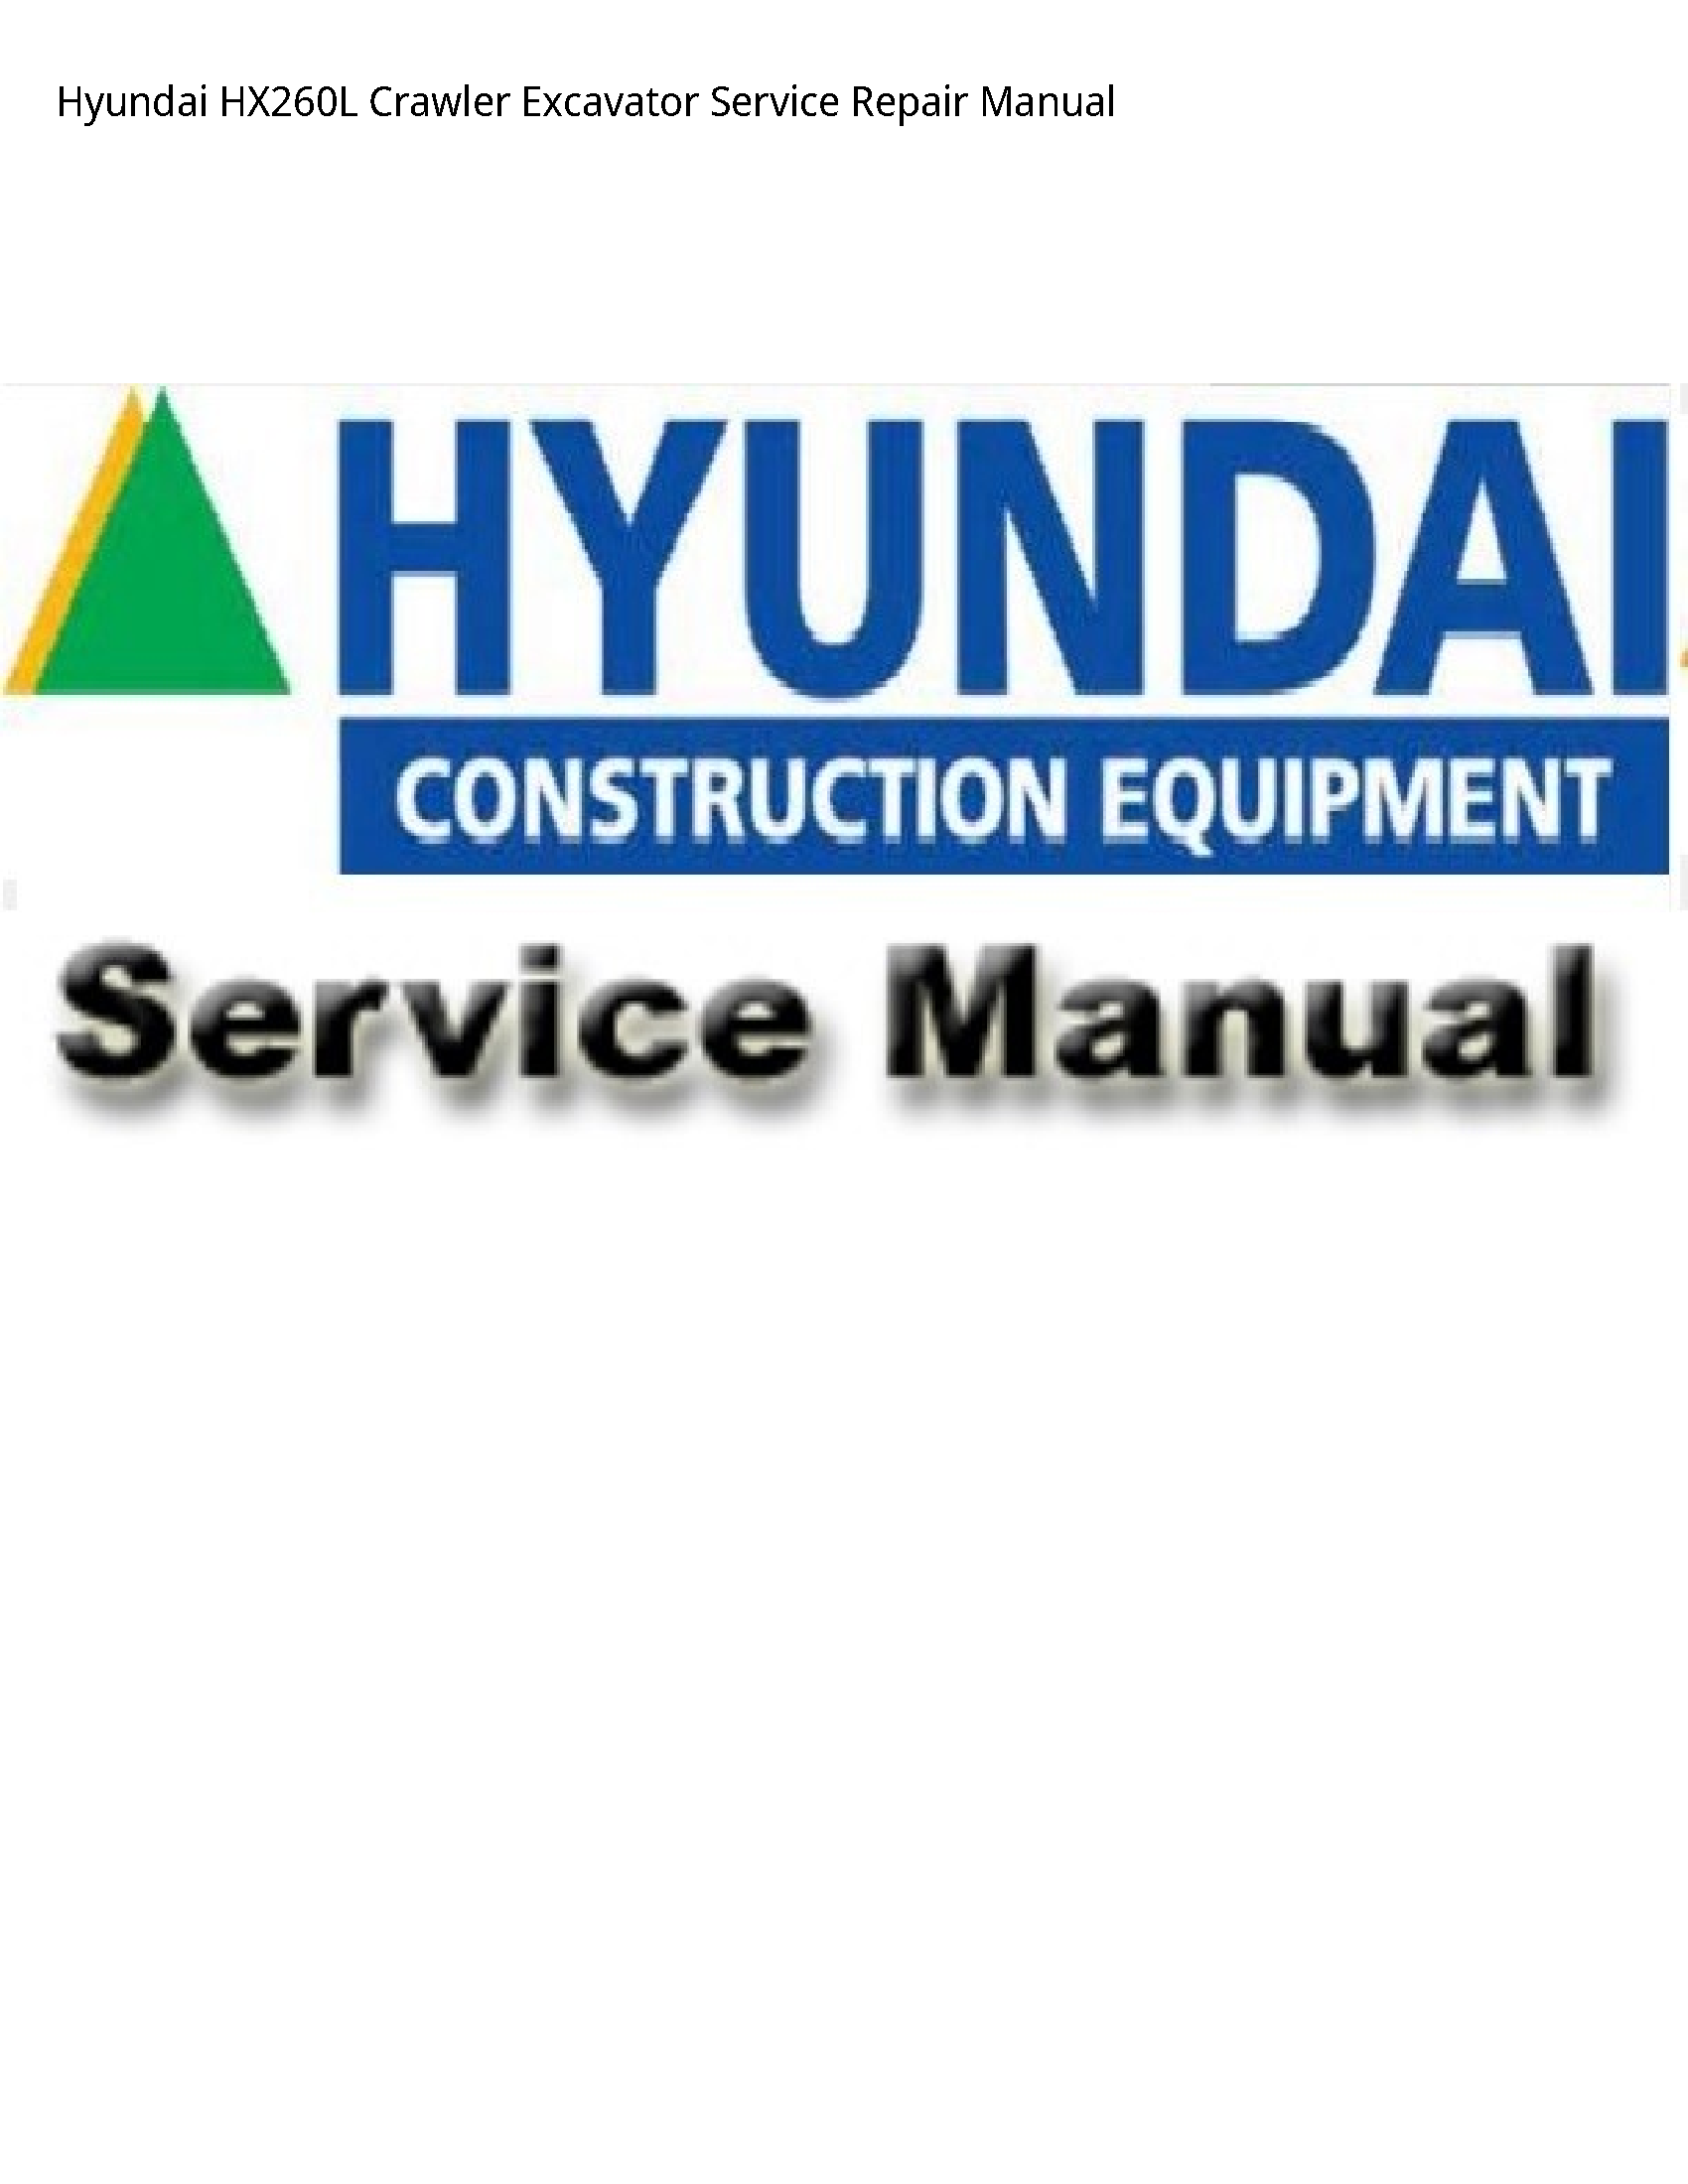 Hyundai HX260L Crawler Excavator manual